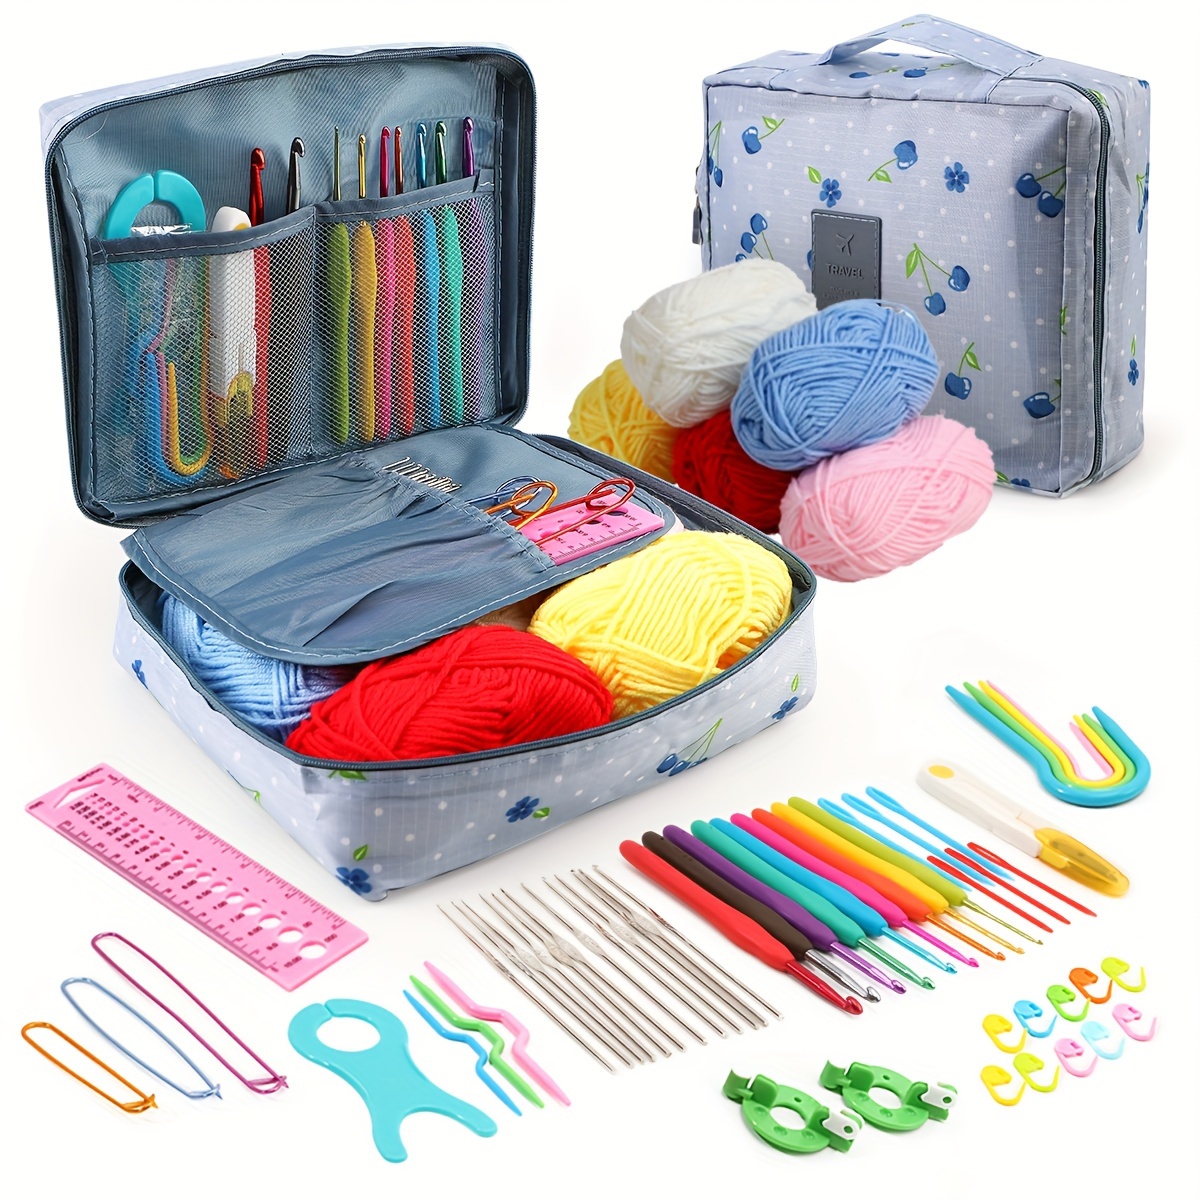 J Mark Crochet Kit with Yarn Set- Premium Bundle Includes Crochet Hooks, Acrylic Crochet Yarn Balls, Needles, Book, Bags and